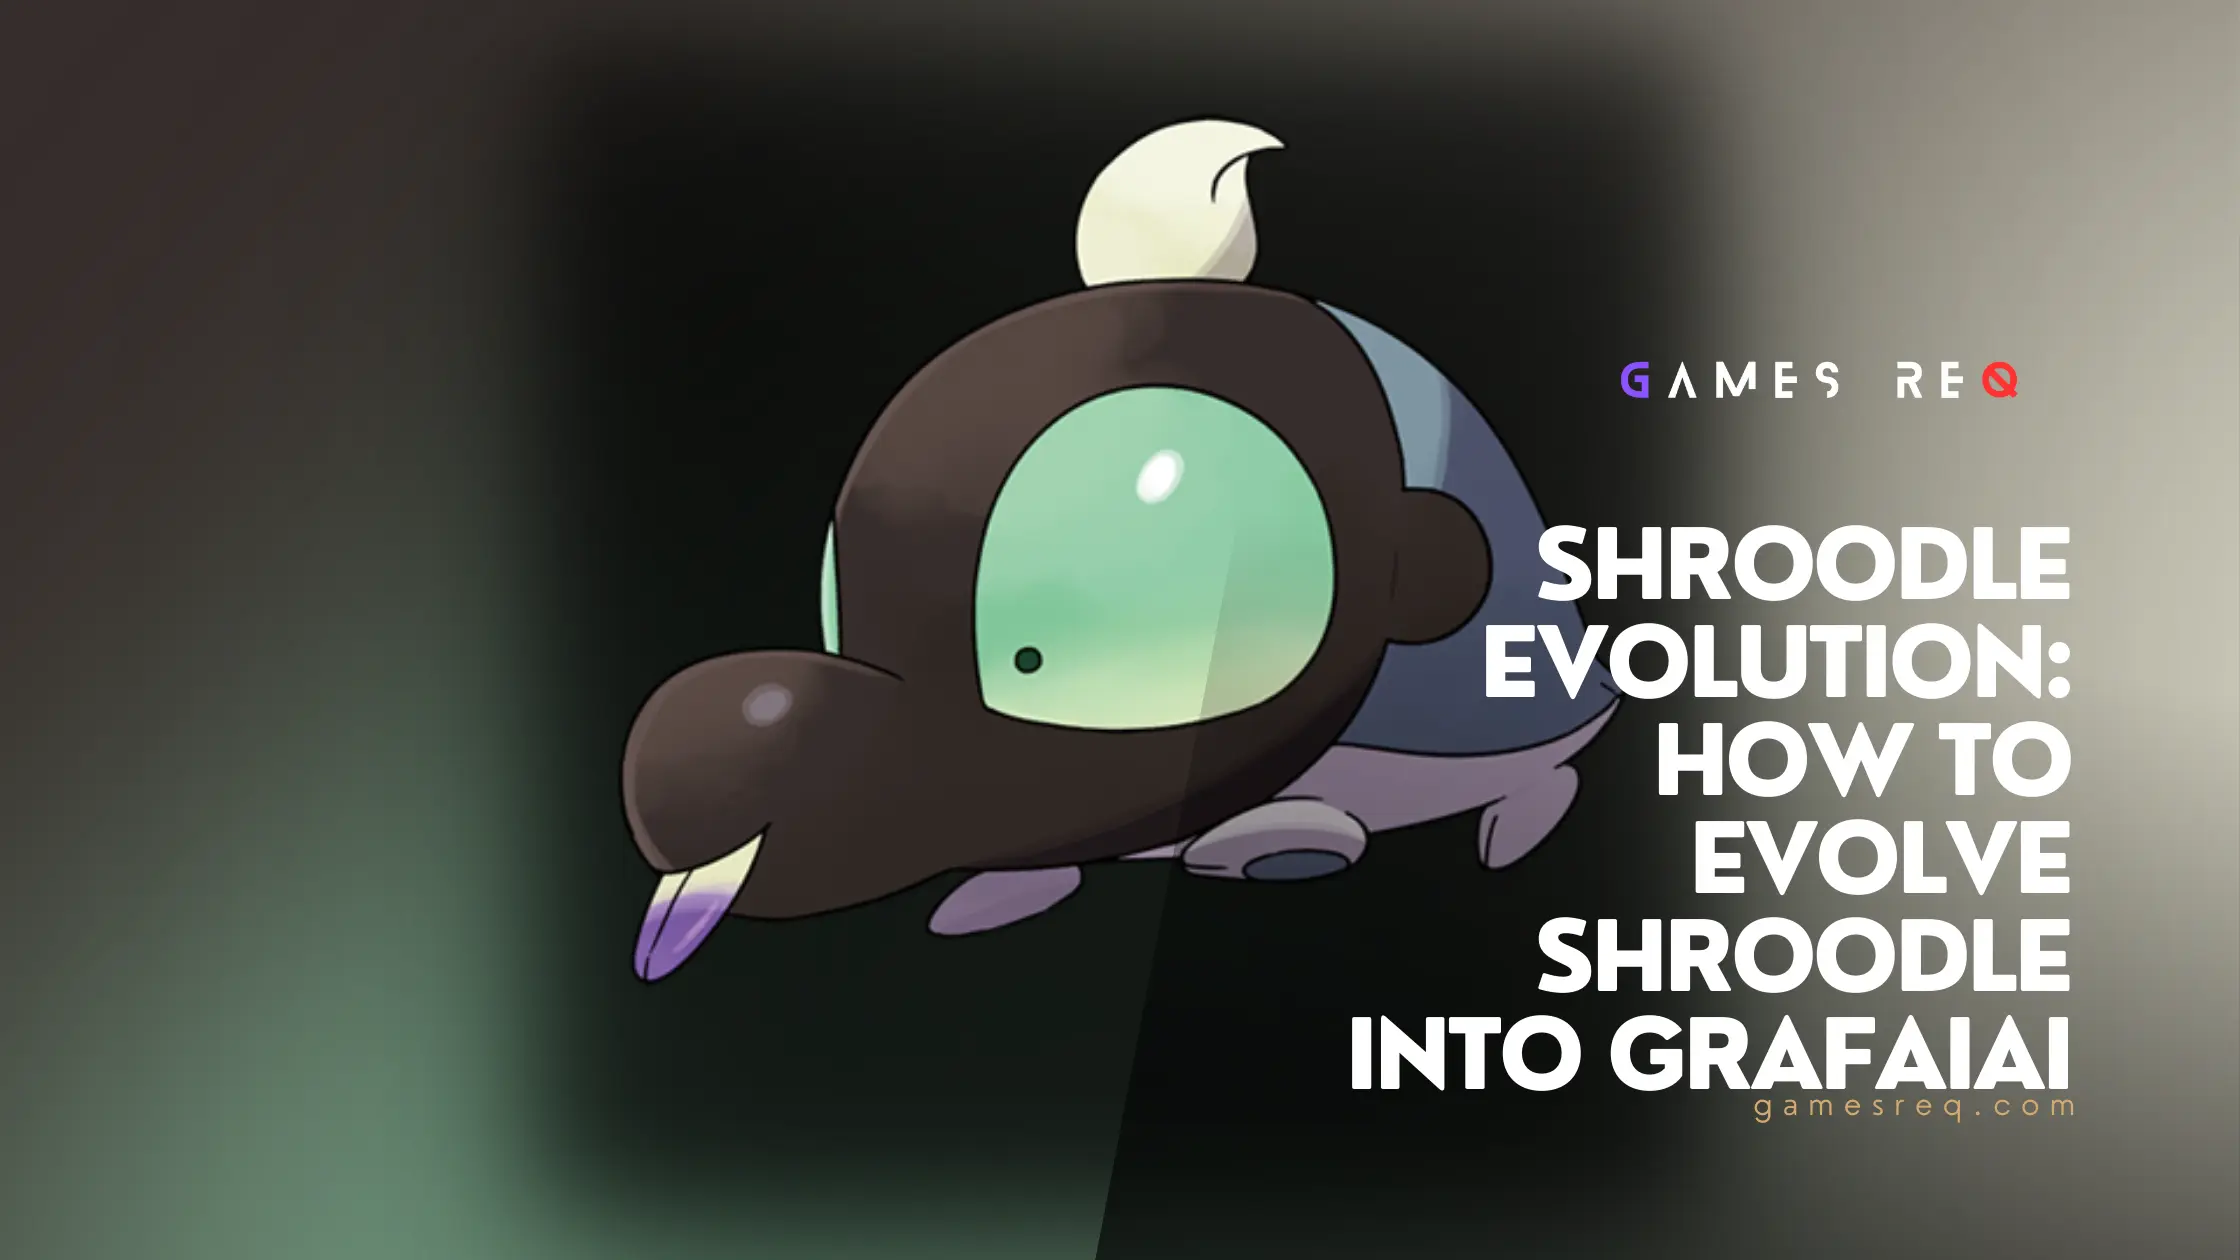 Shroodle Evolution How to Evolve Shroodle into Grafaiai